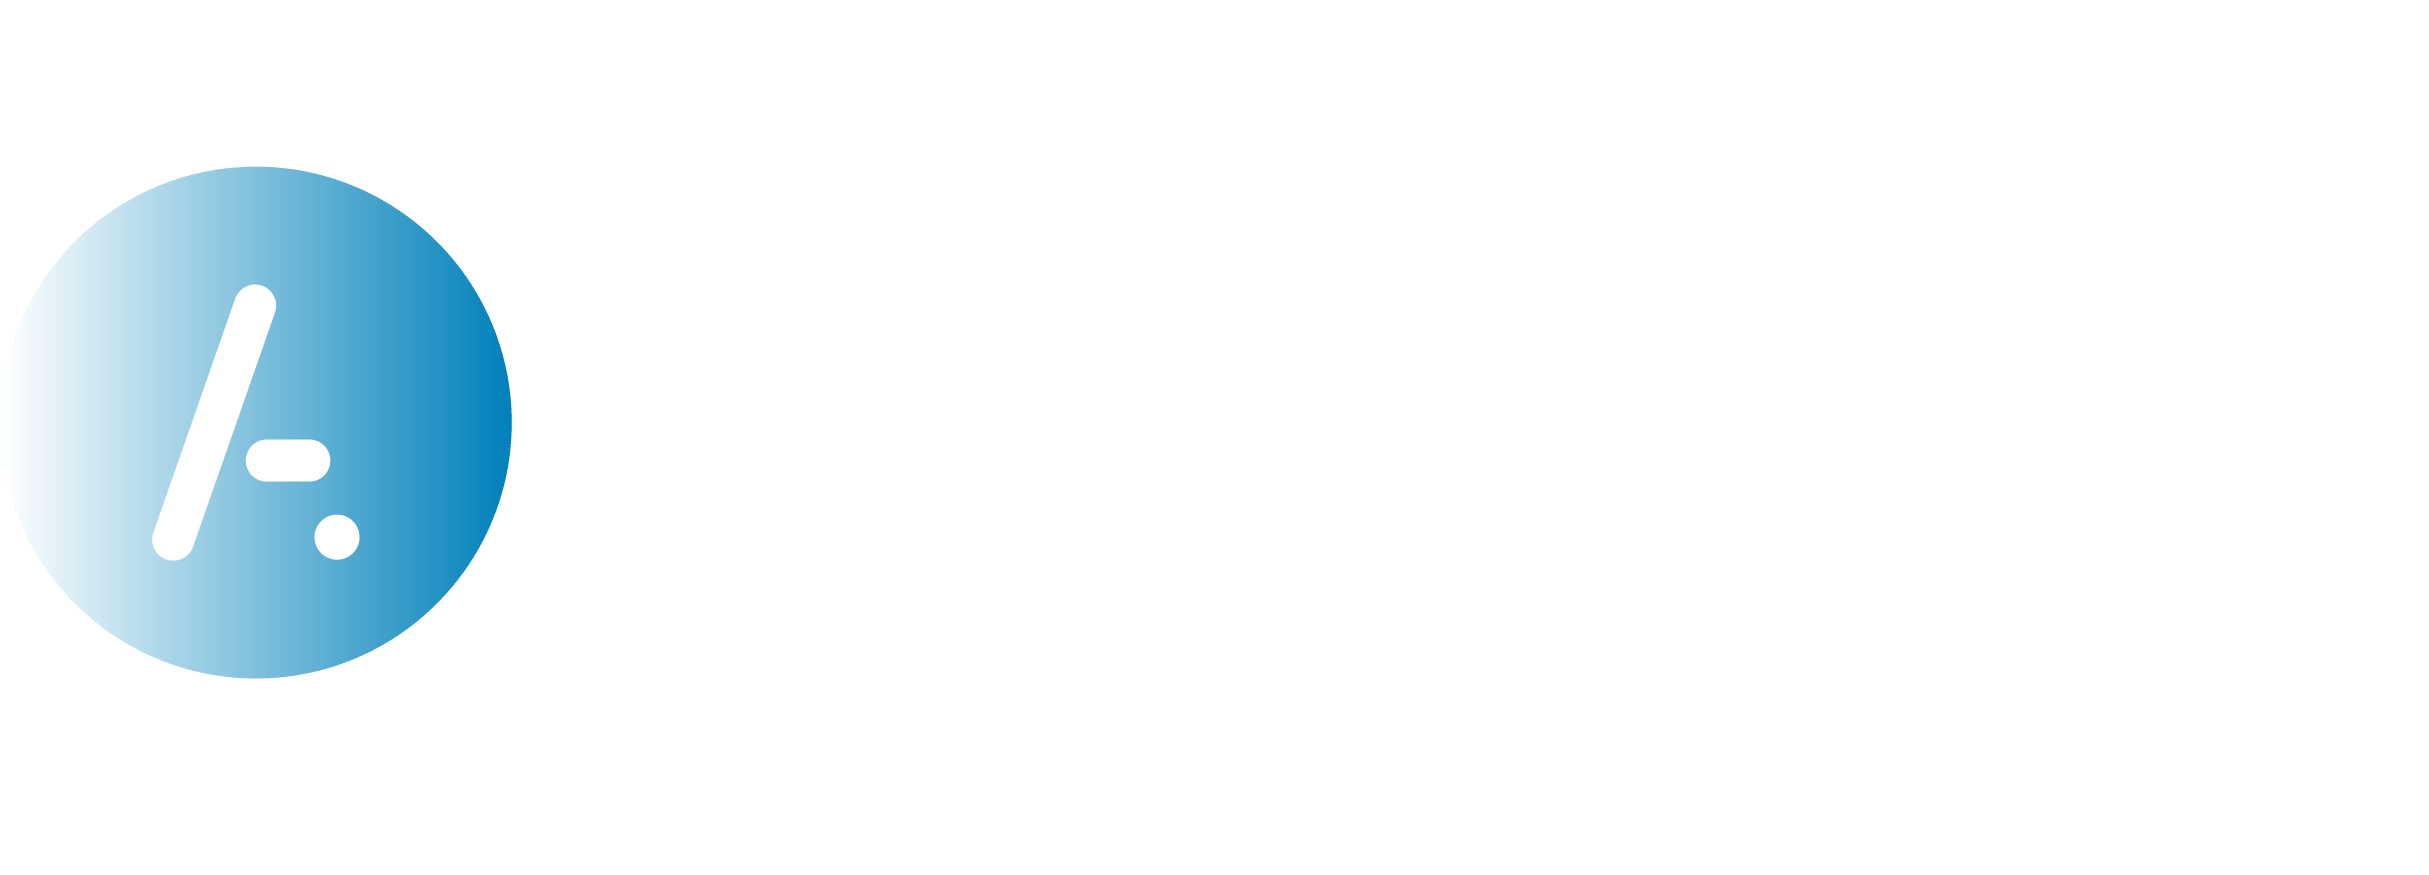 Logo Akio TWS blanc avec baseline